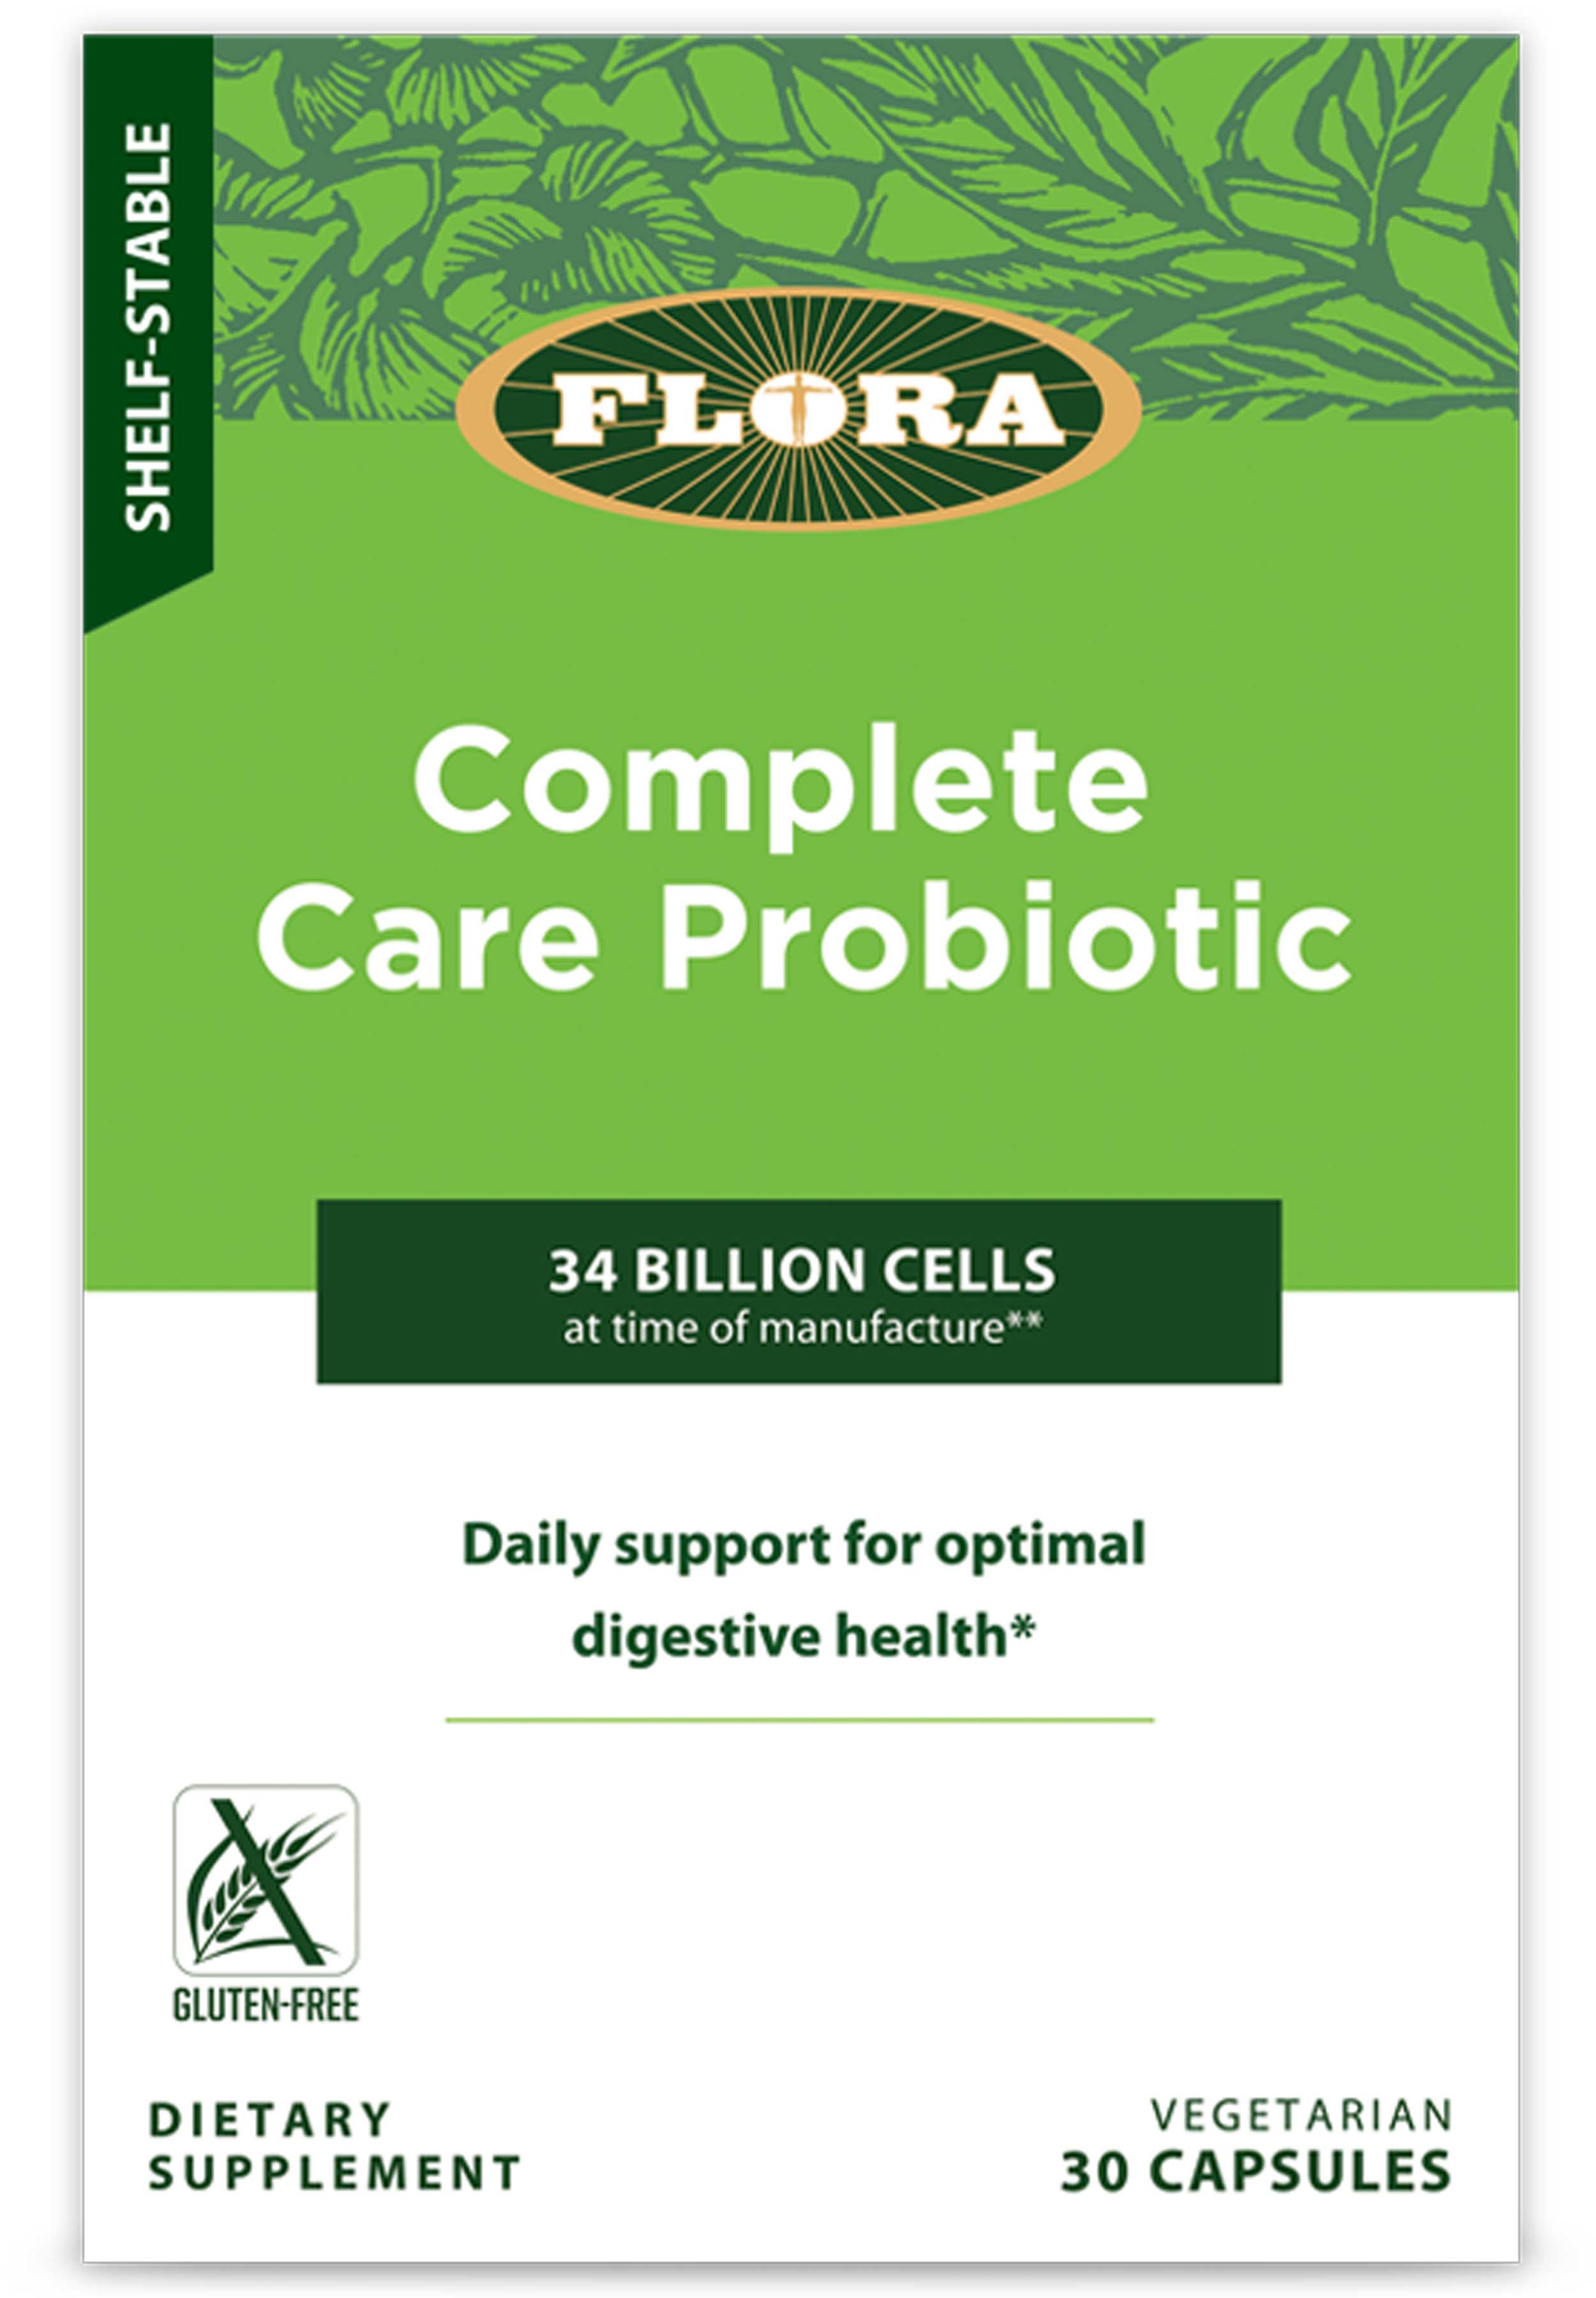 Flora Complete Care Probiotic